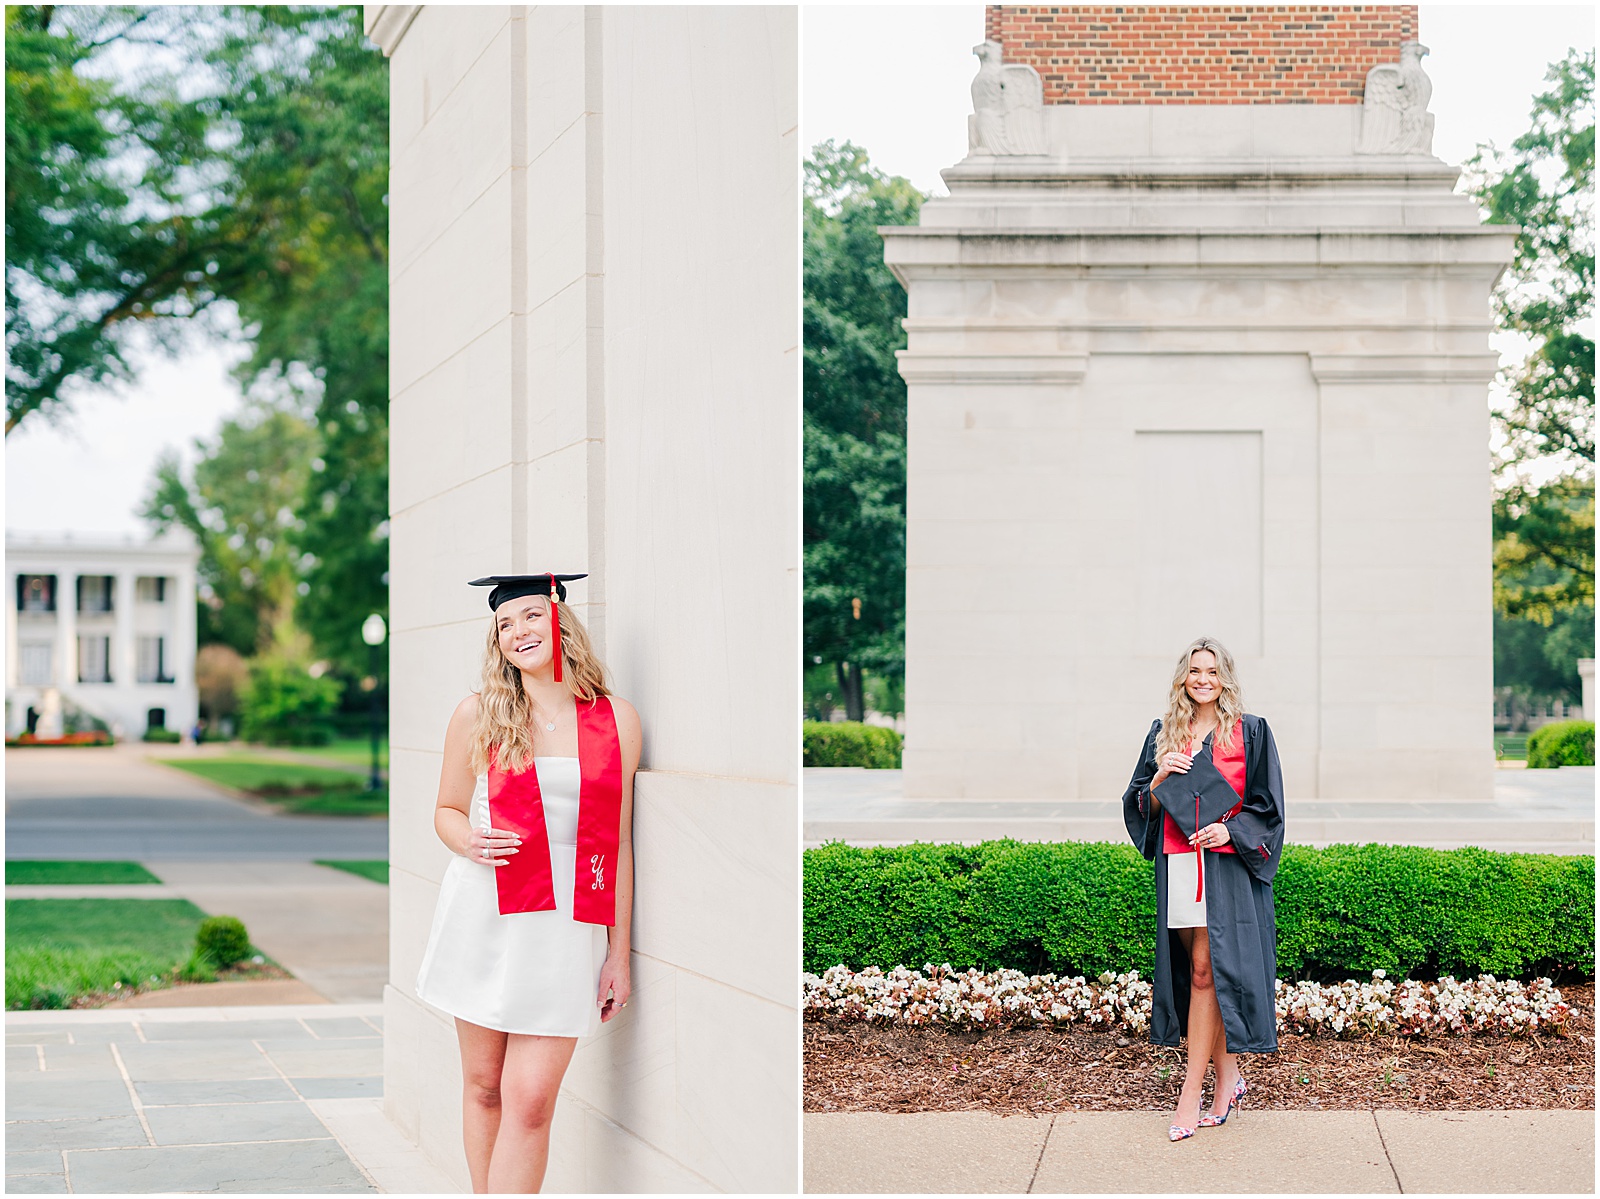 Graduation portraits at Denny Chimes at The University of Alabama